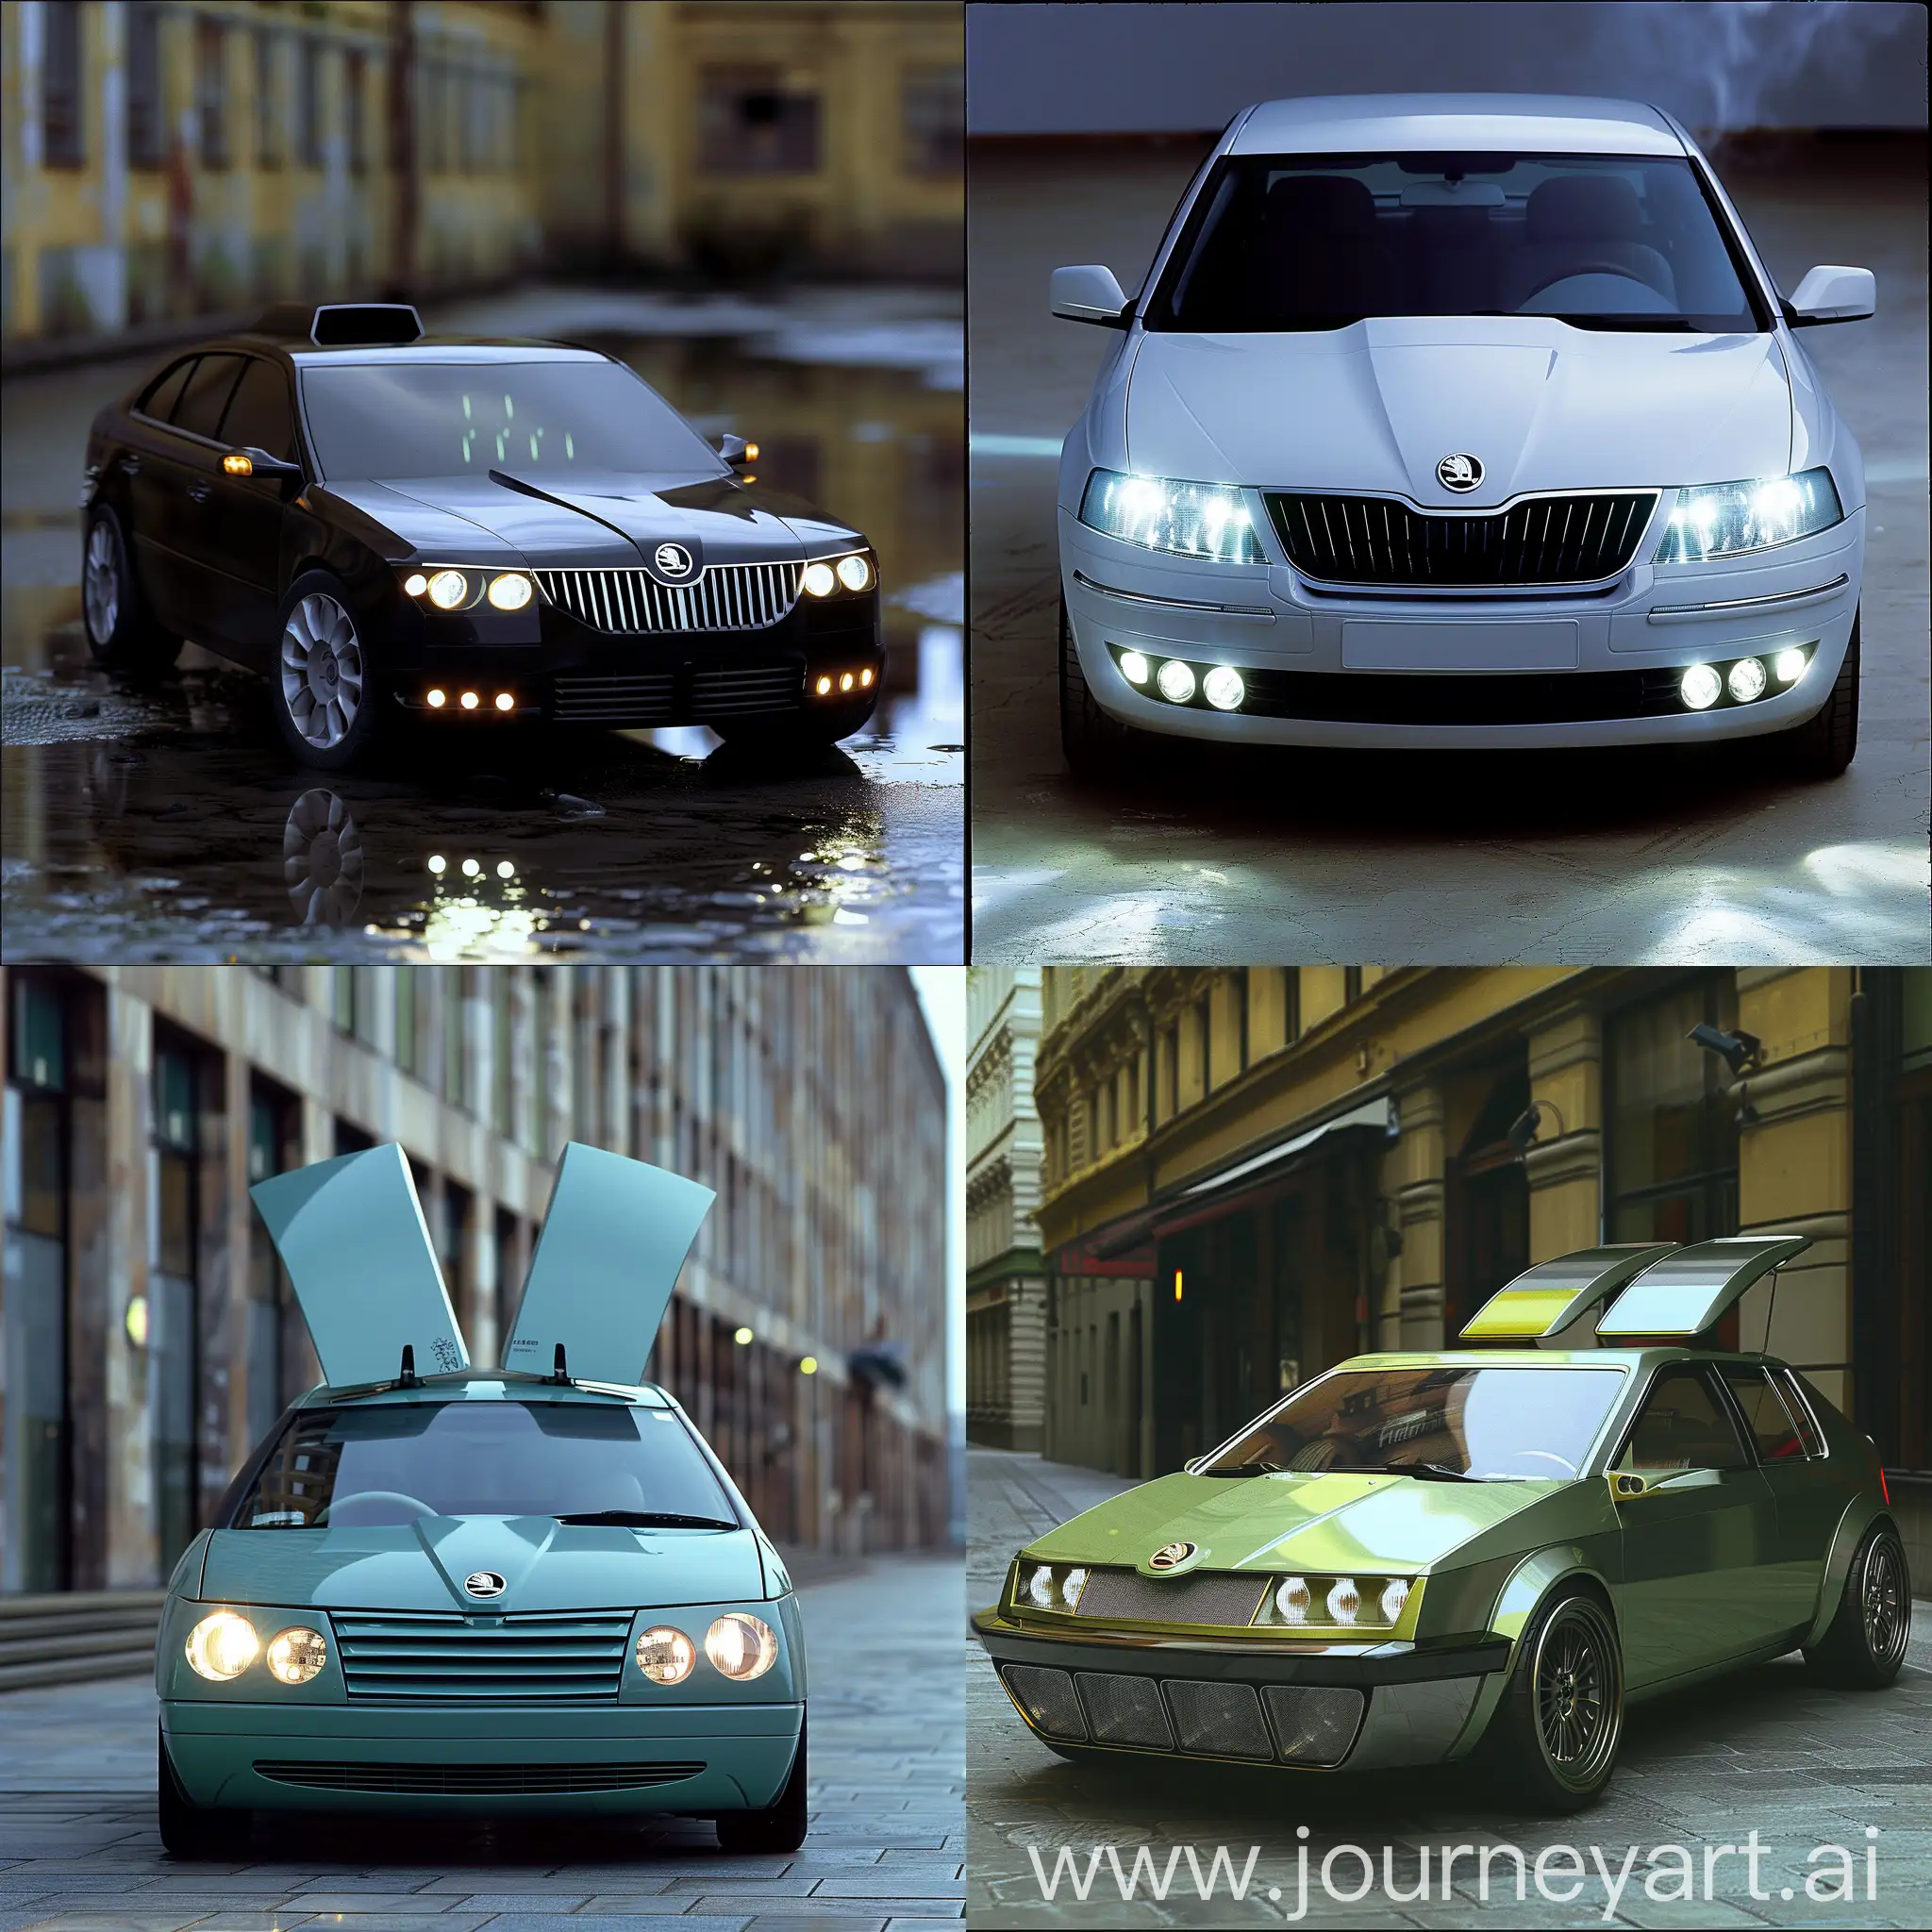 1999-Skoda-Felicia-with-PopUp-Headlights-Classic-Car-Enthusiasts-Dream